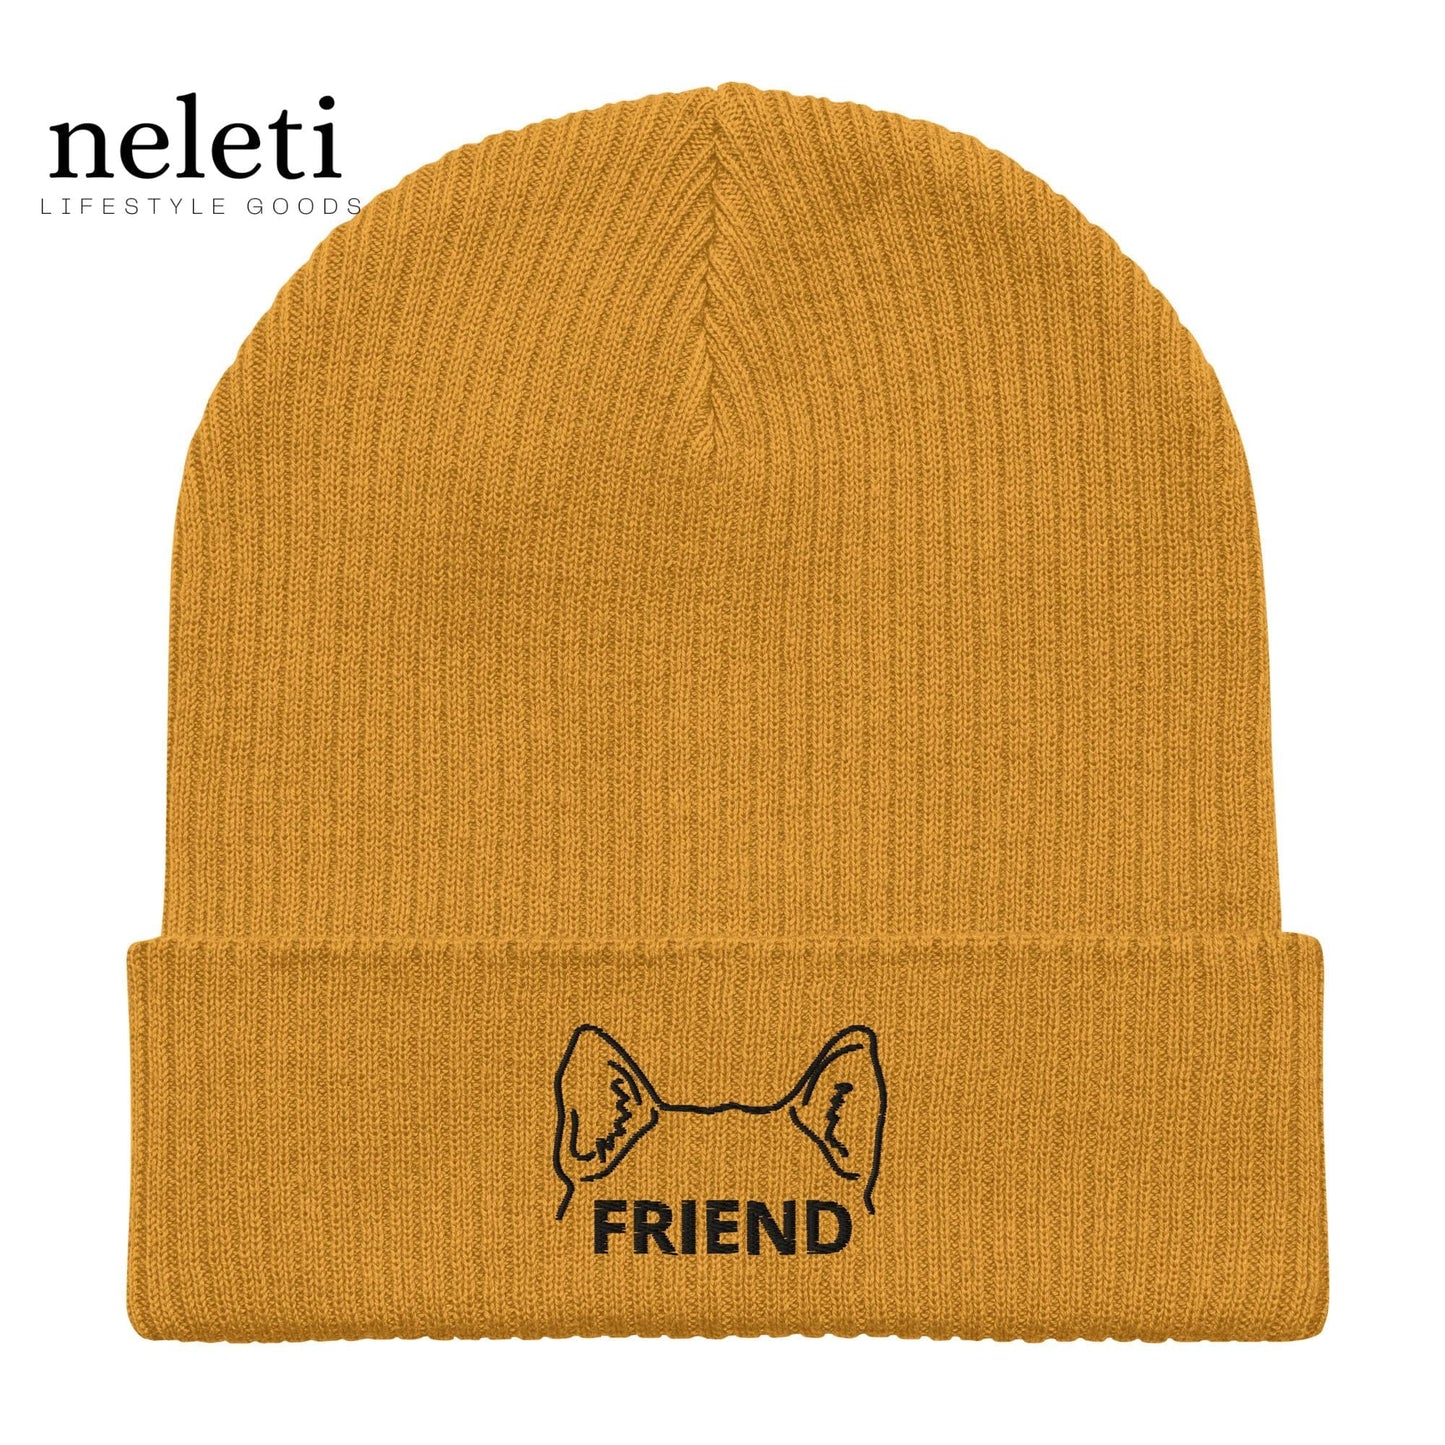    neleti.com-custom-embroidered-yellow-beanie-for-dog-lovers